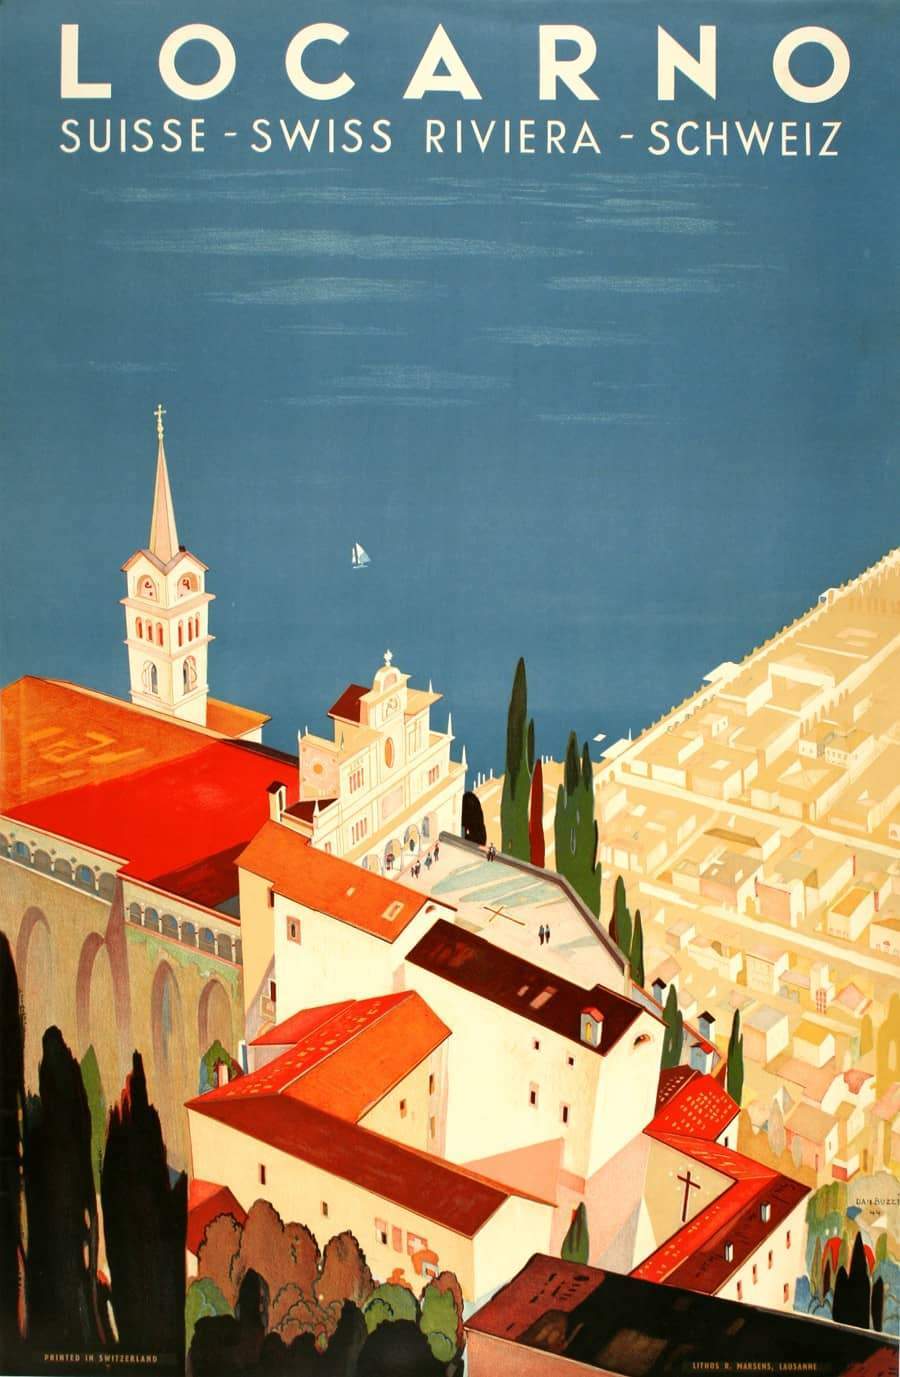 Locarno Original Swiss Travel Poster 1944 by Daniele Buzzi